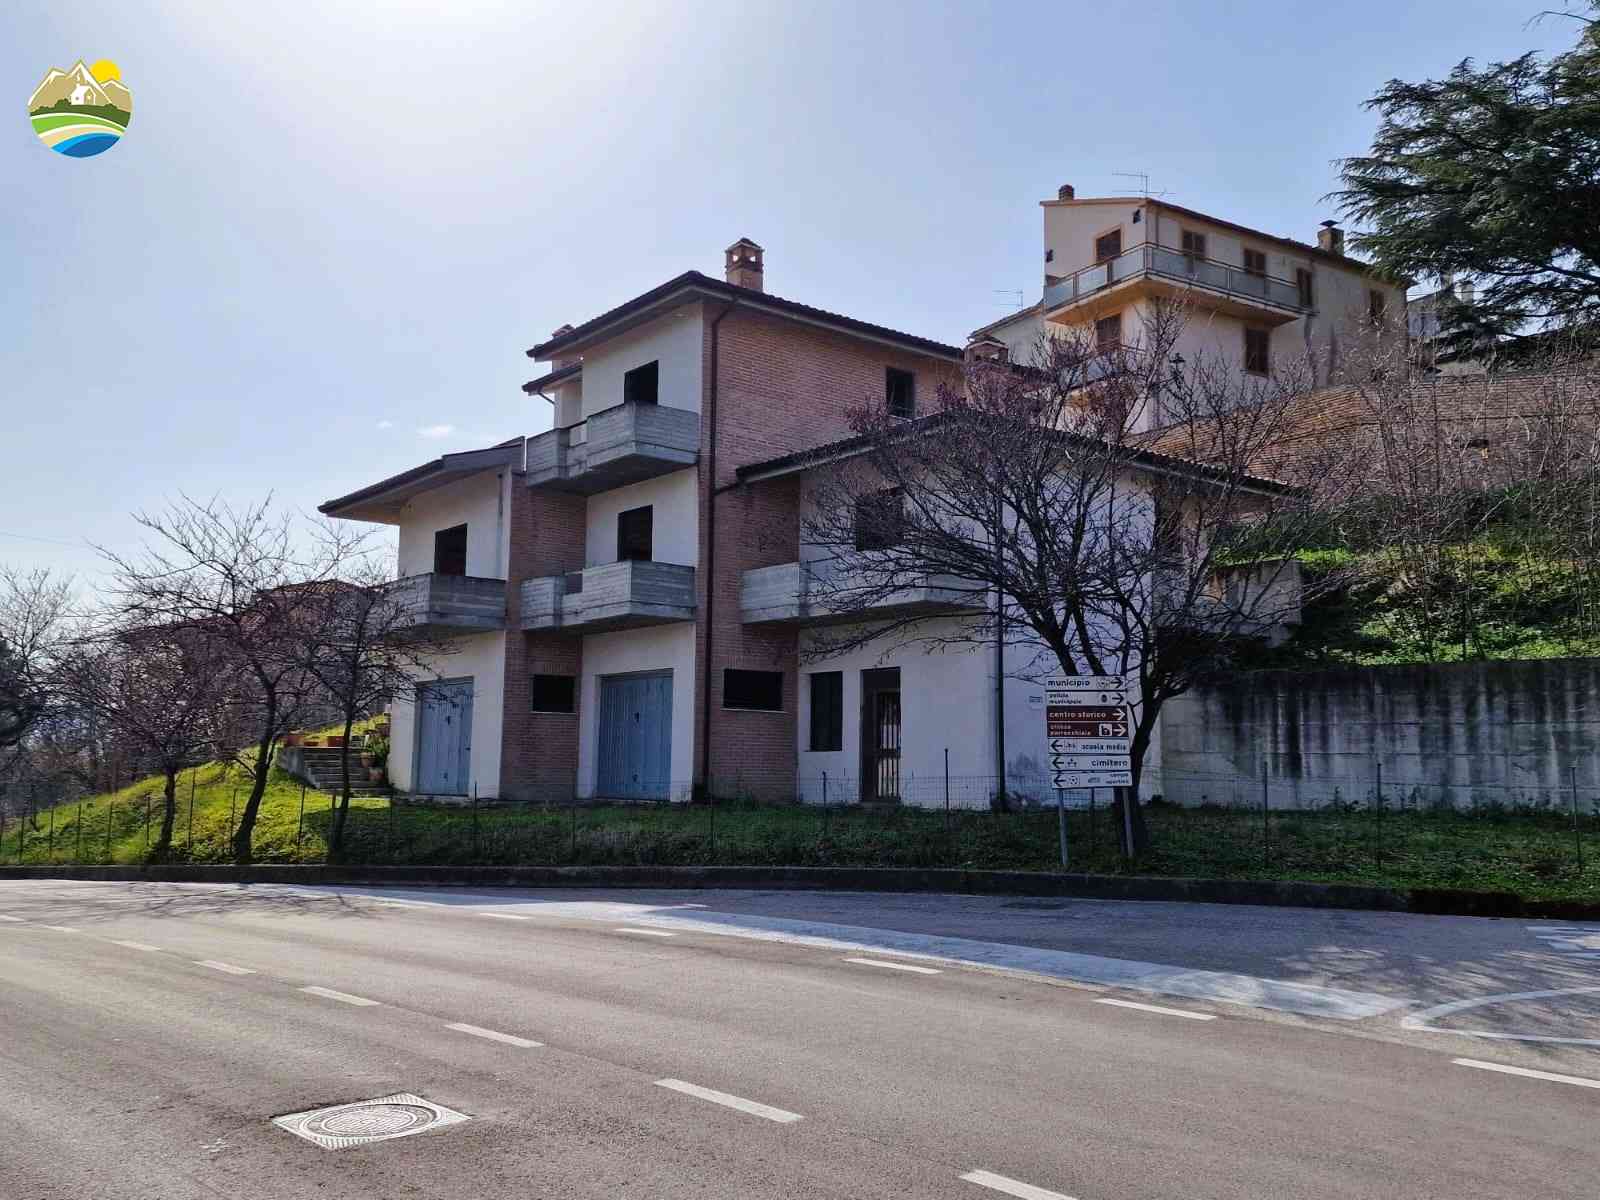 Villa Villa in vendita Castilenti (TE), Villa Mandorlo - Castilenti - EUR 129.969 750